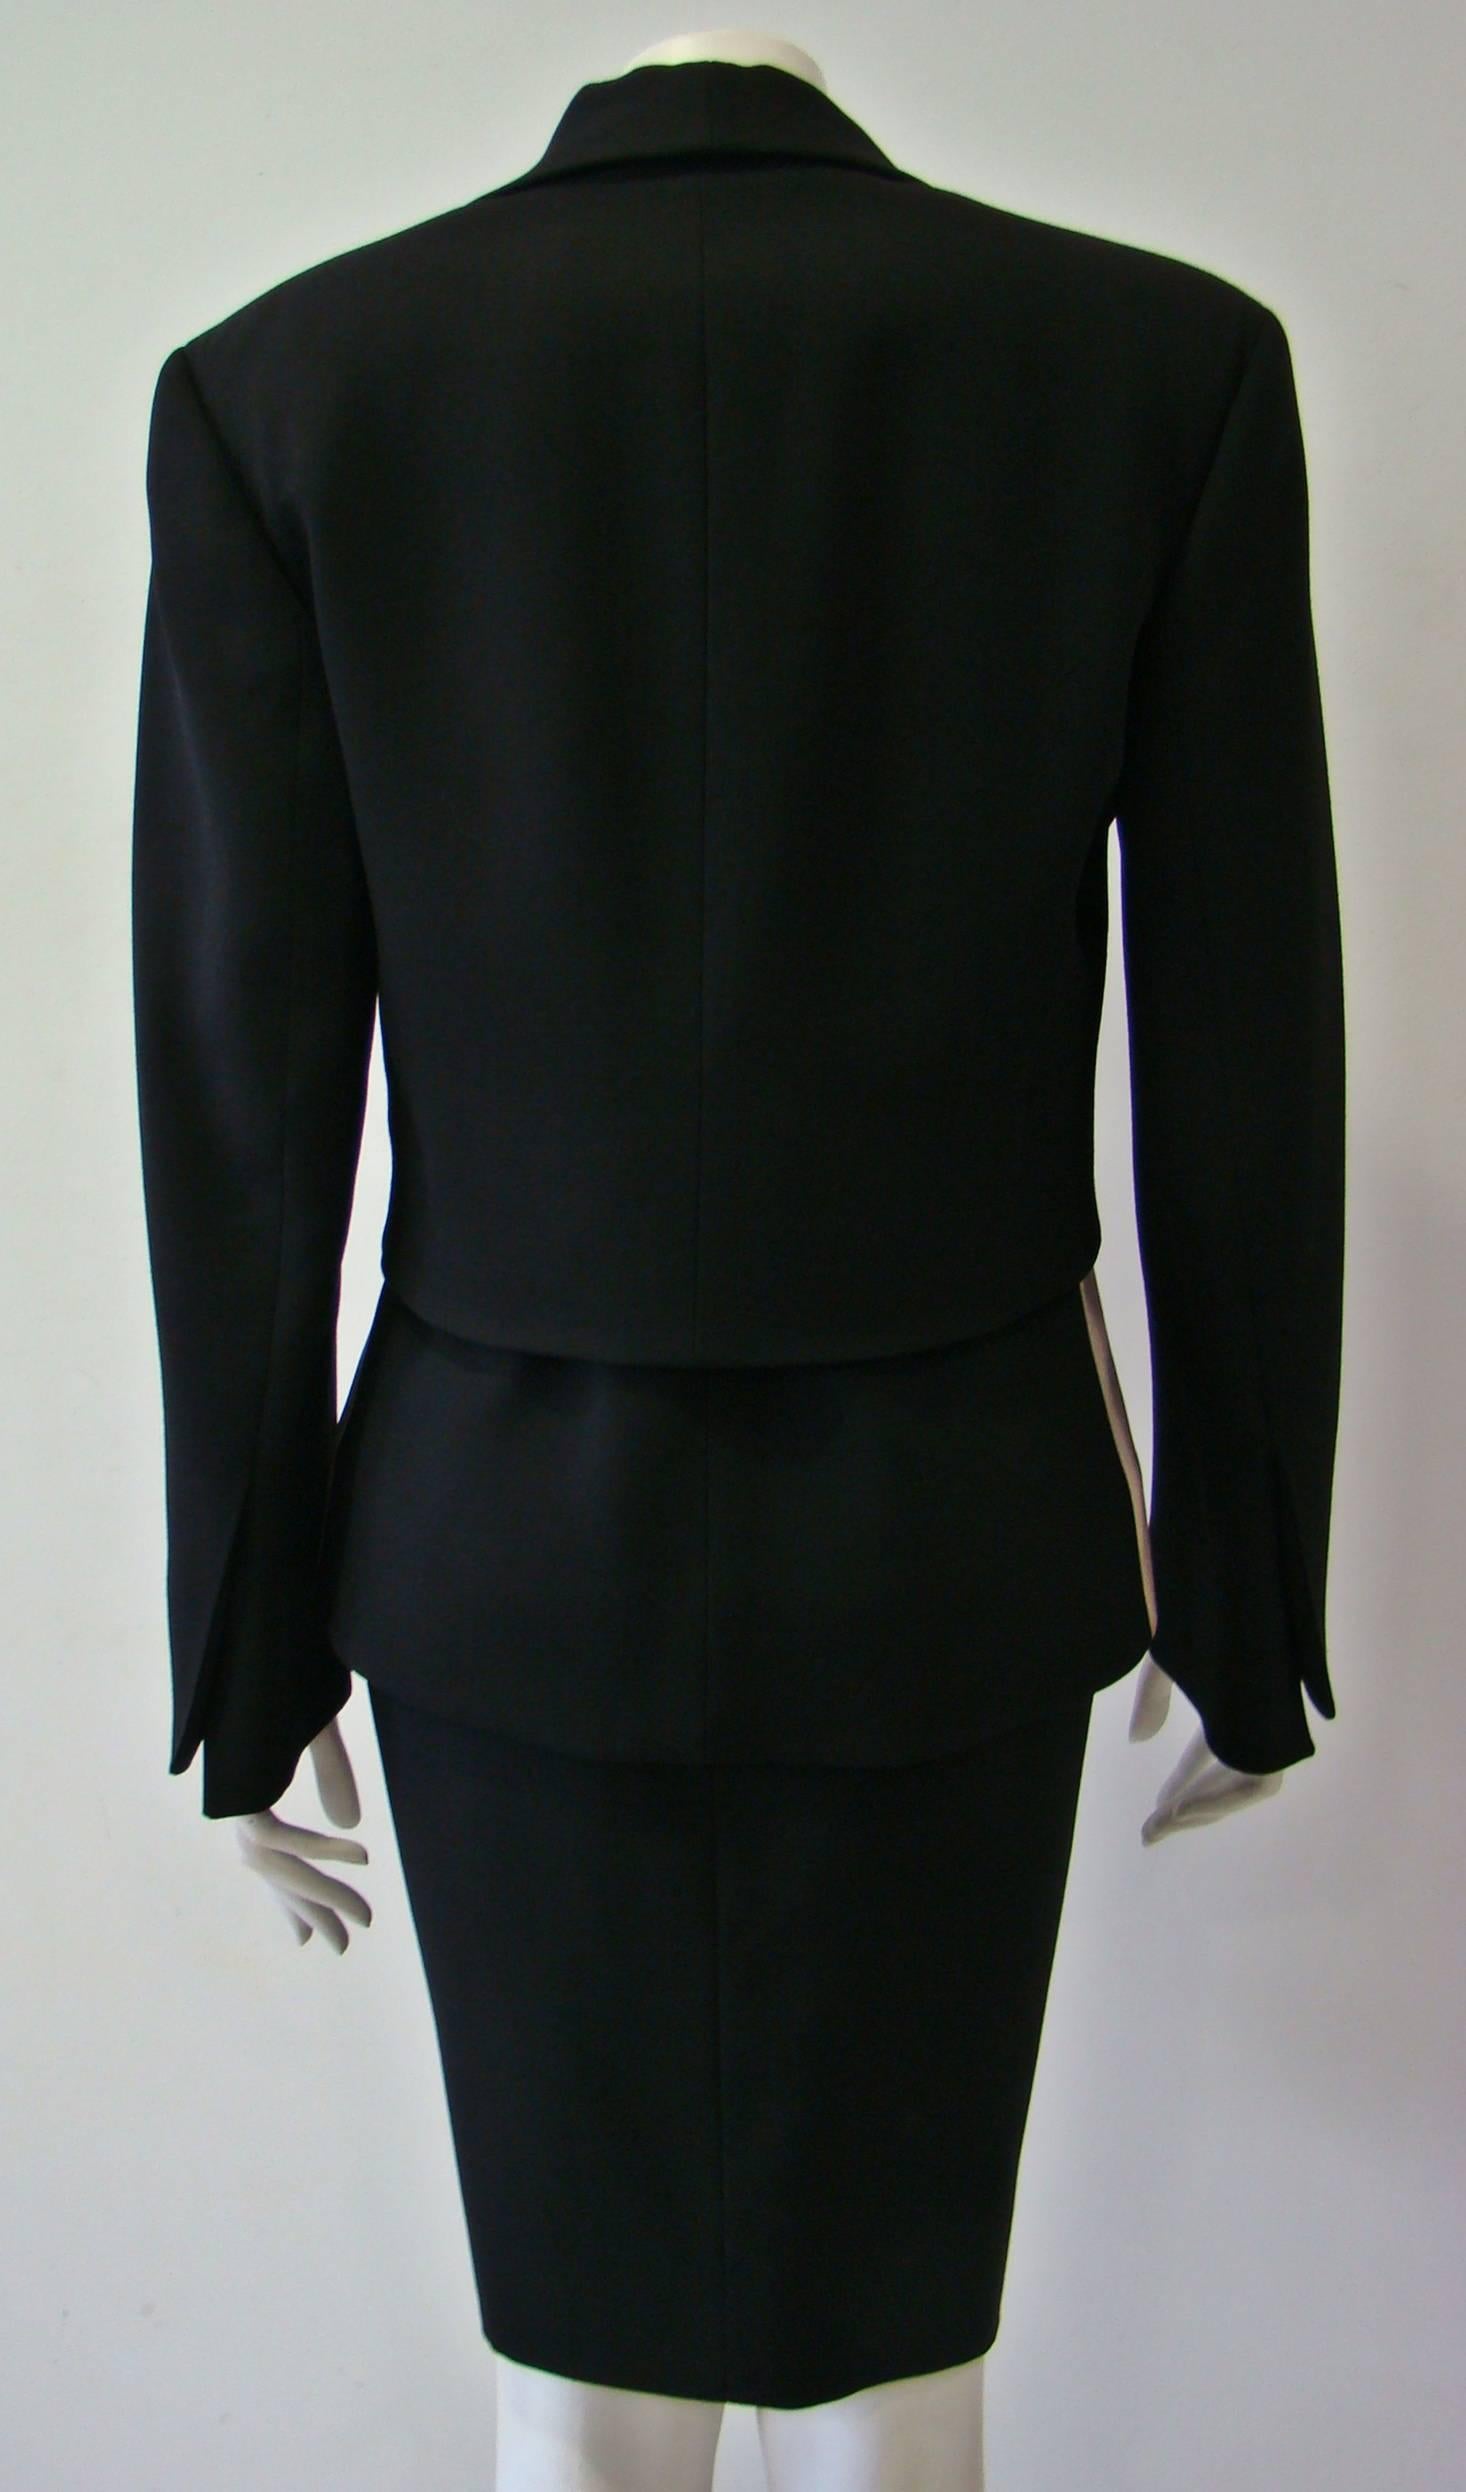 Rare Gianfranco Ferre Tuxedo Jacket 1990's For Sale 1